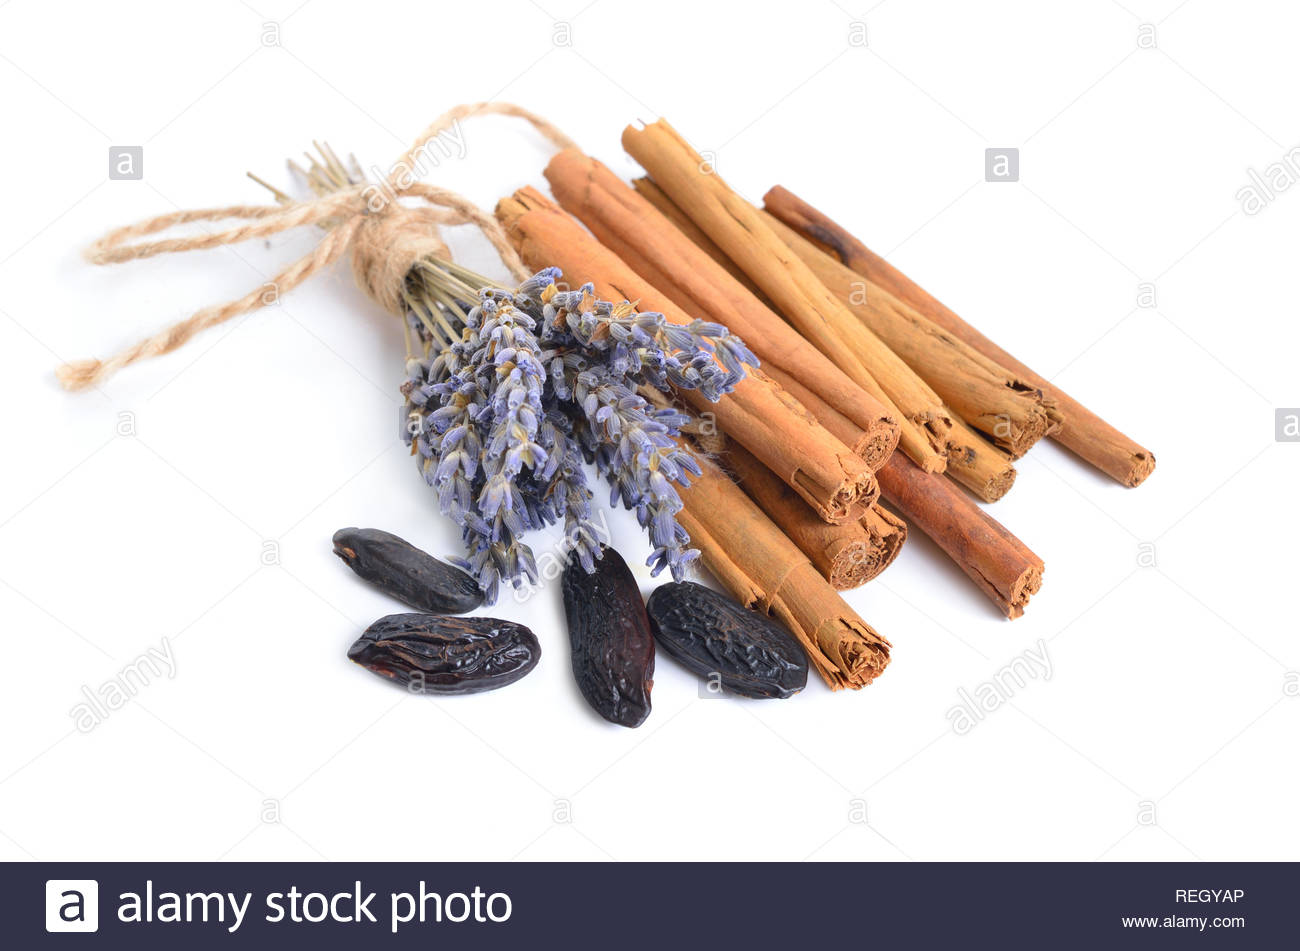 Cinnamon Sticks From Sri Lanka With Lavender And Tonka Beans